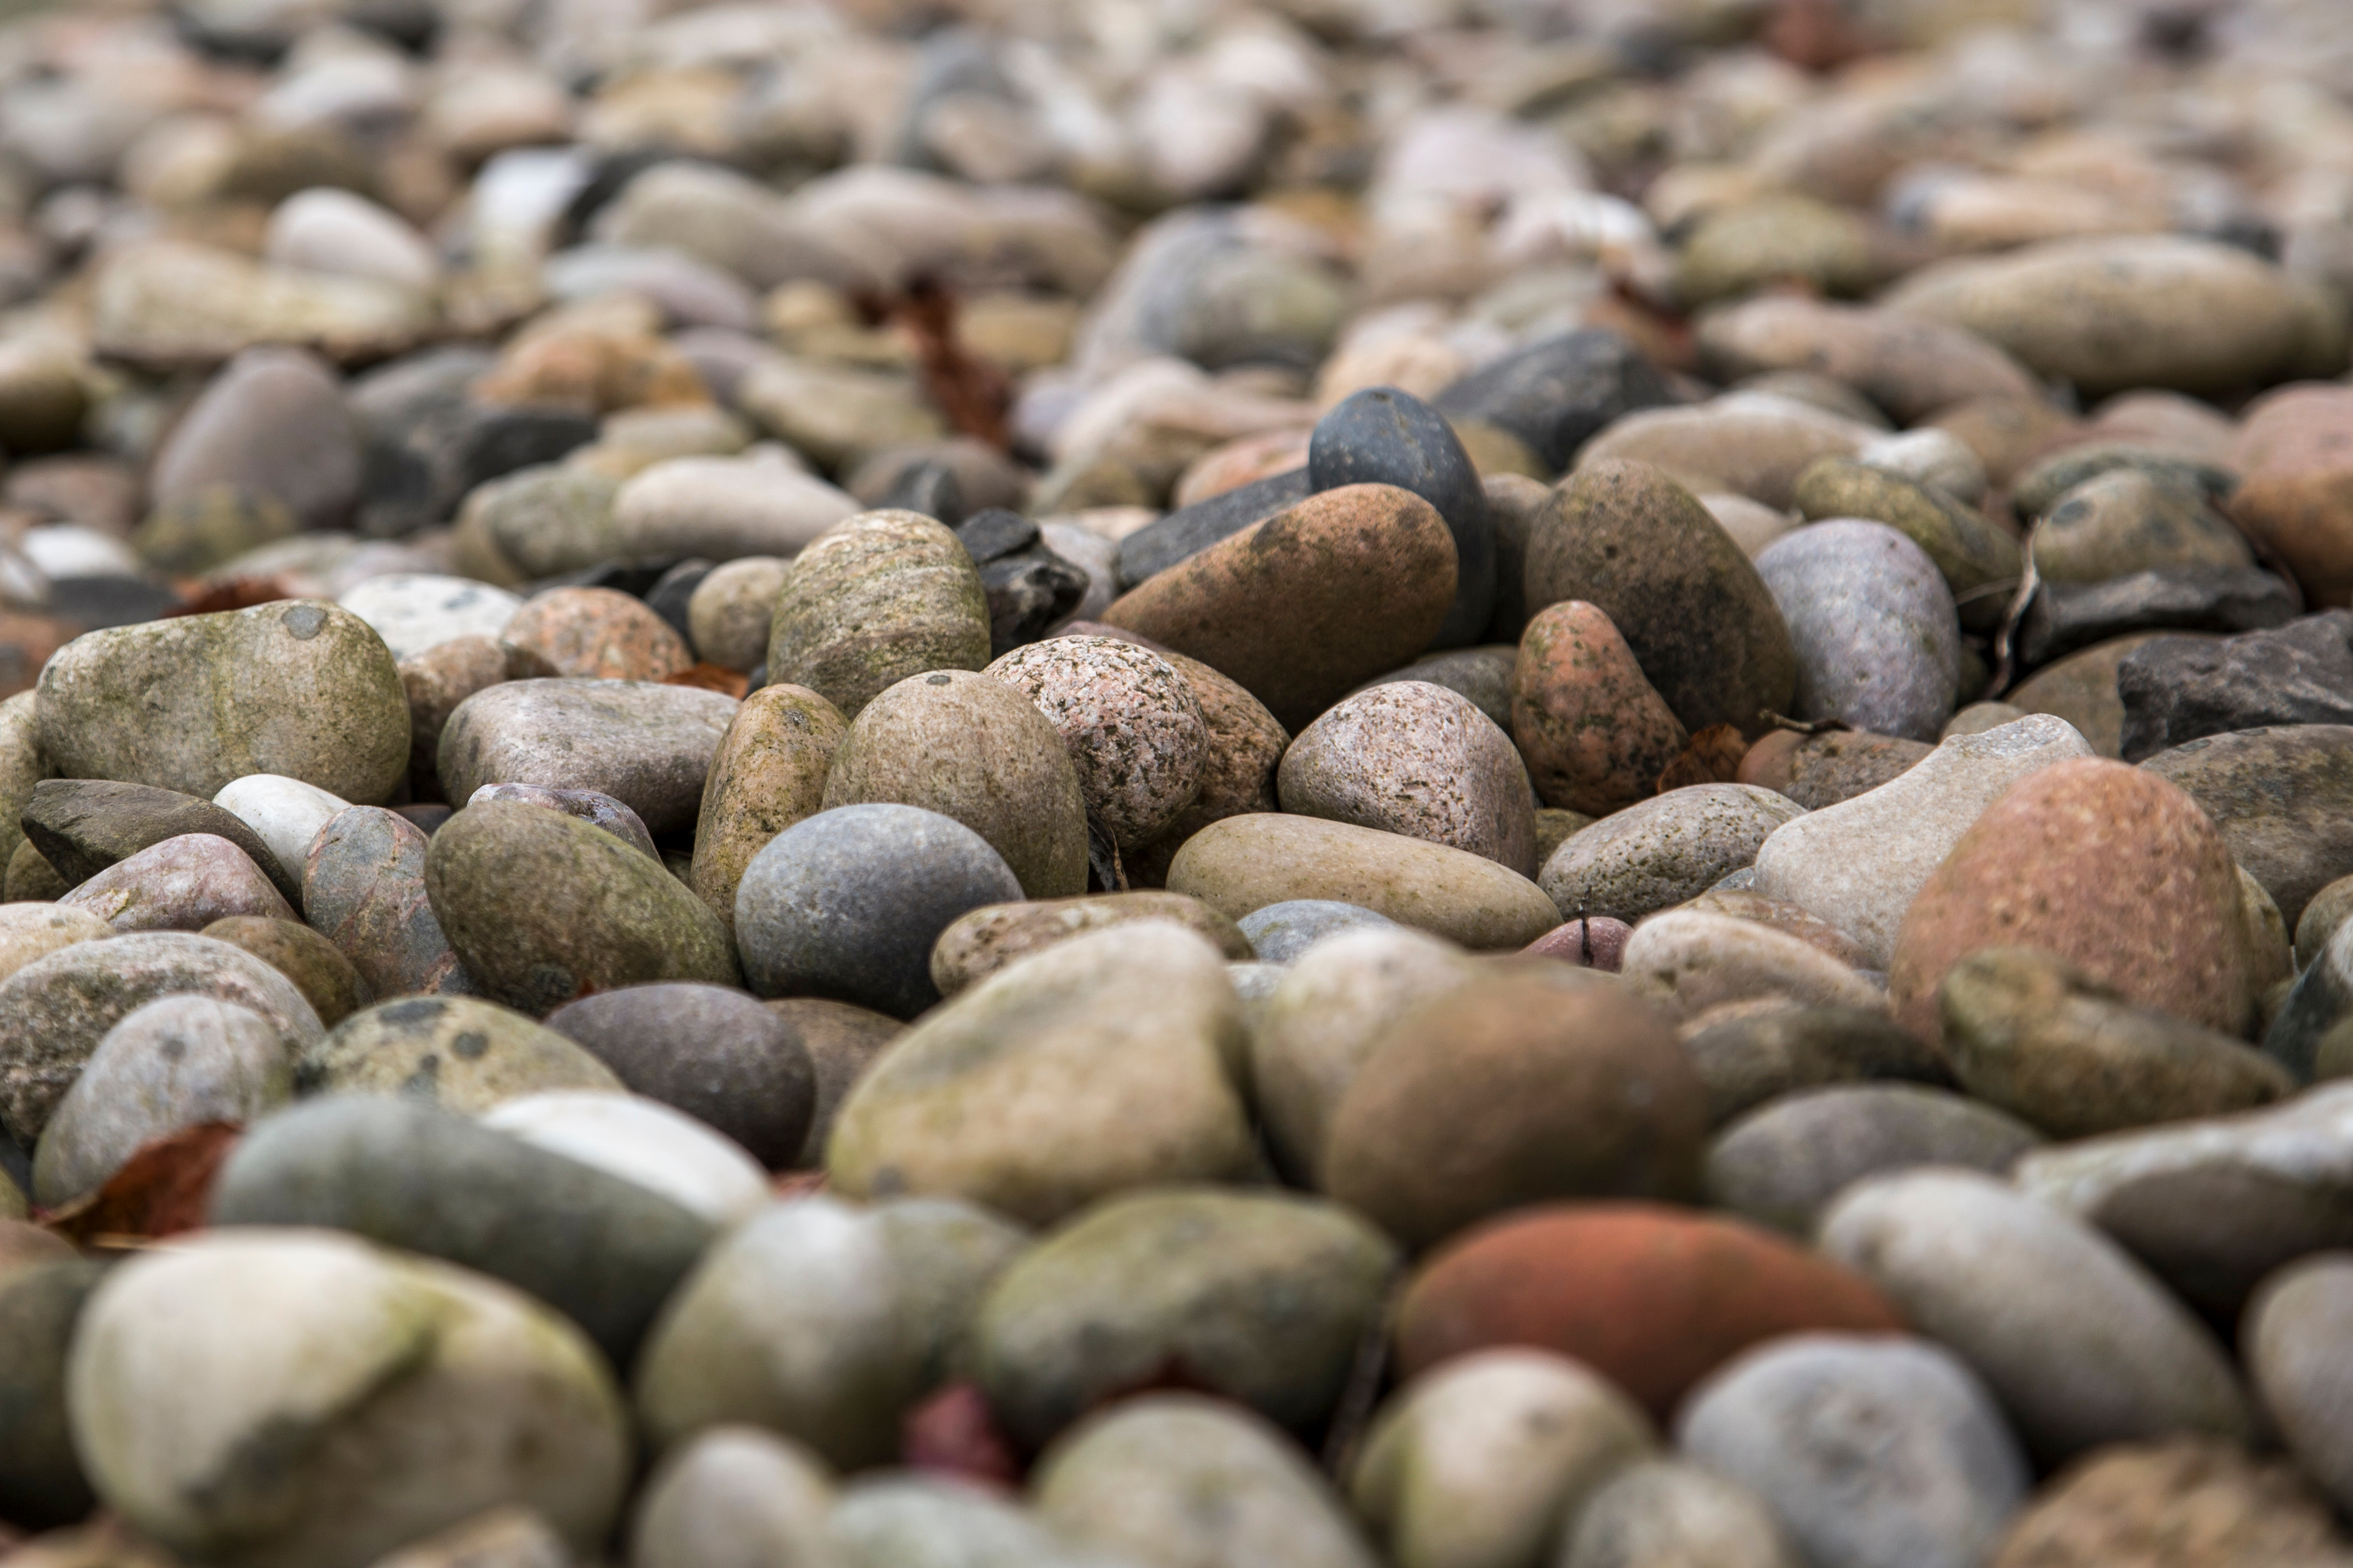 Wet stone. Крупная галька. Морские камешки. Камушки галька. Речные камни.